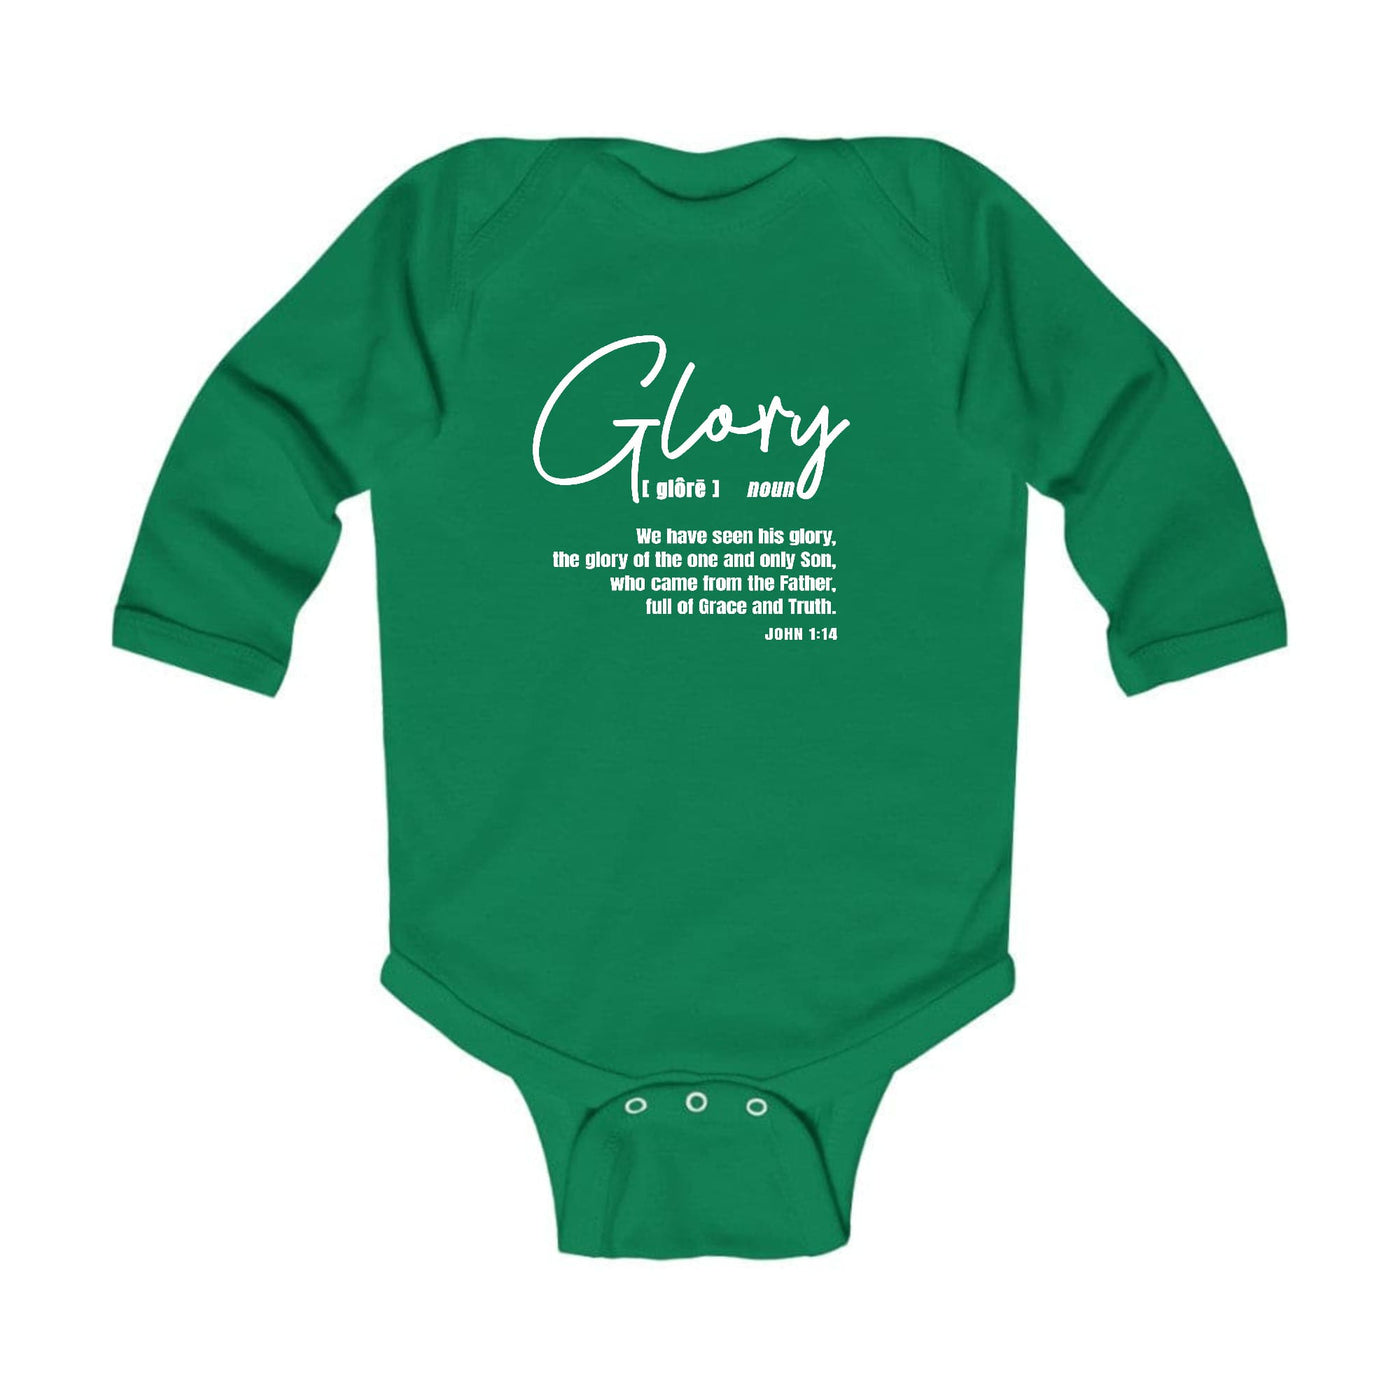 Infant Long Sleeve Graphic T-shirt Glory - Christian Inspiration - Childrens